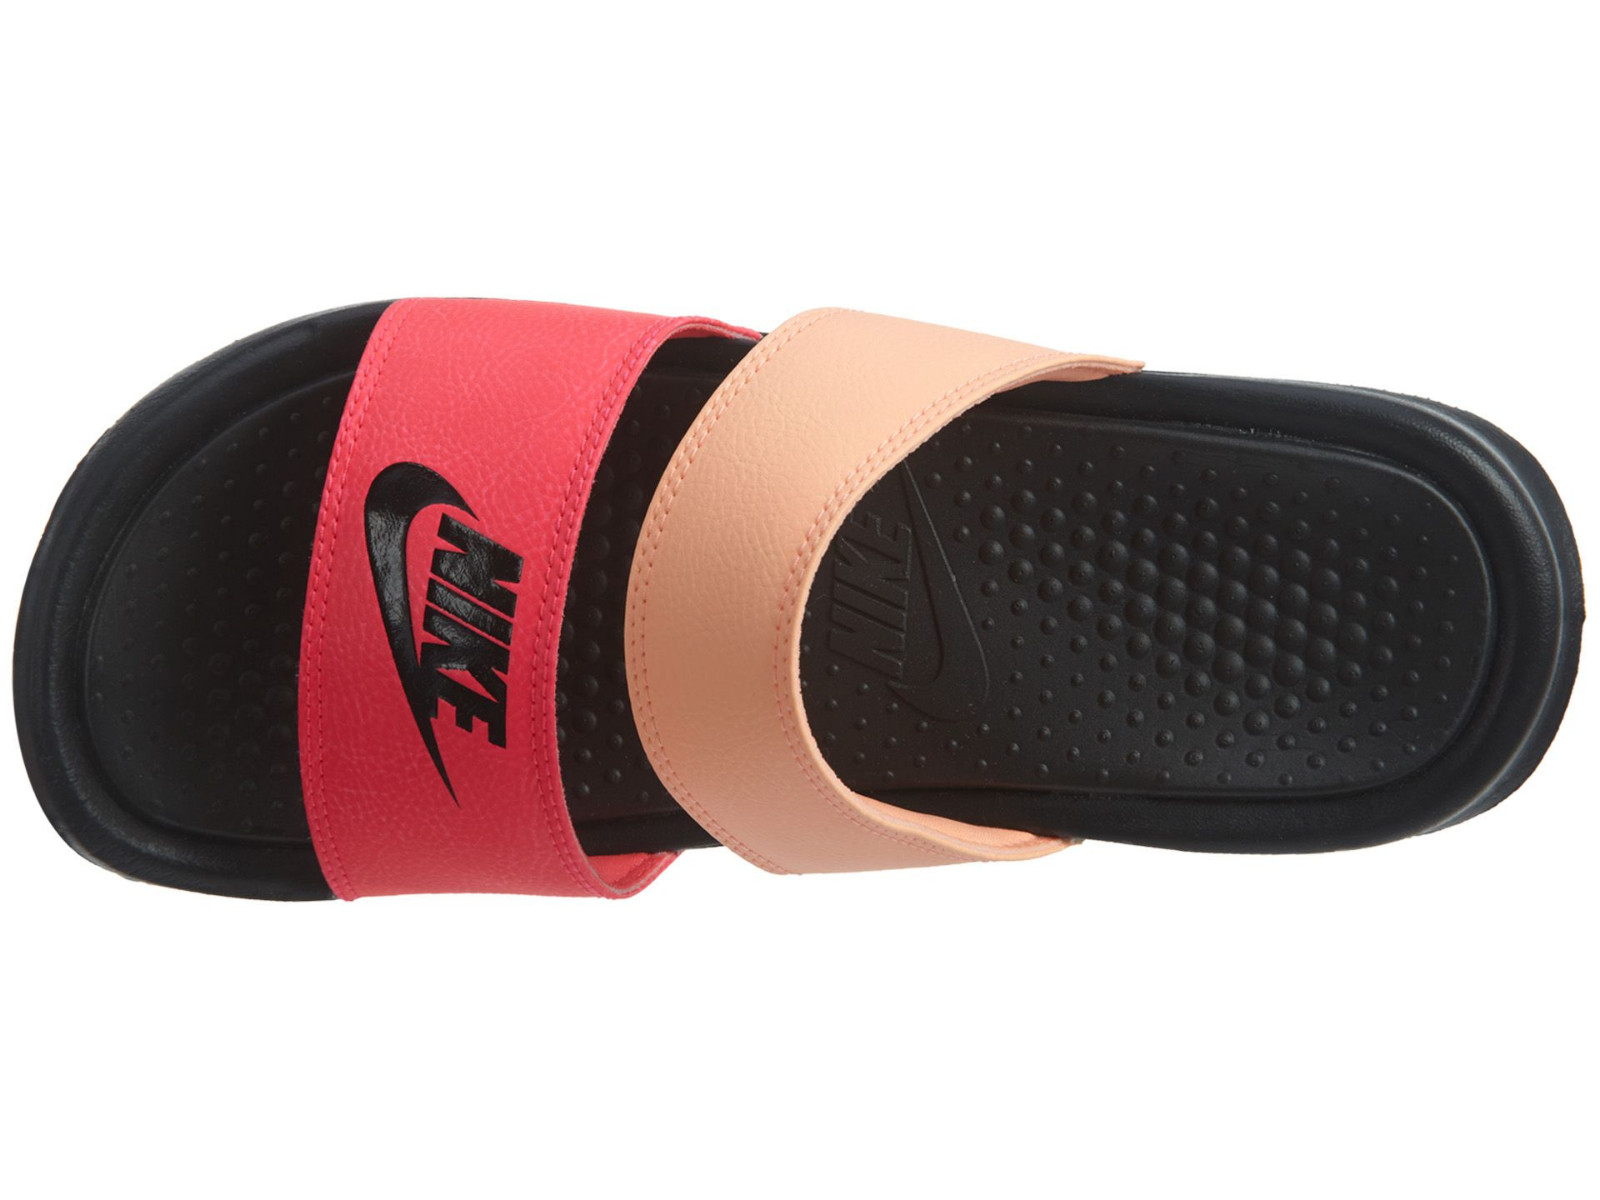 GmarShops - Air Max 270 Noir Et Bleu - 602 - Womens Nike Benassi Duo Slide Racer Pink Sunset Glow Womens Shoes 819717